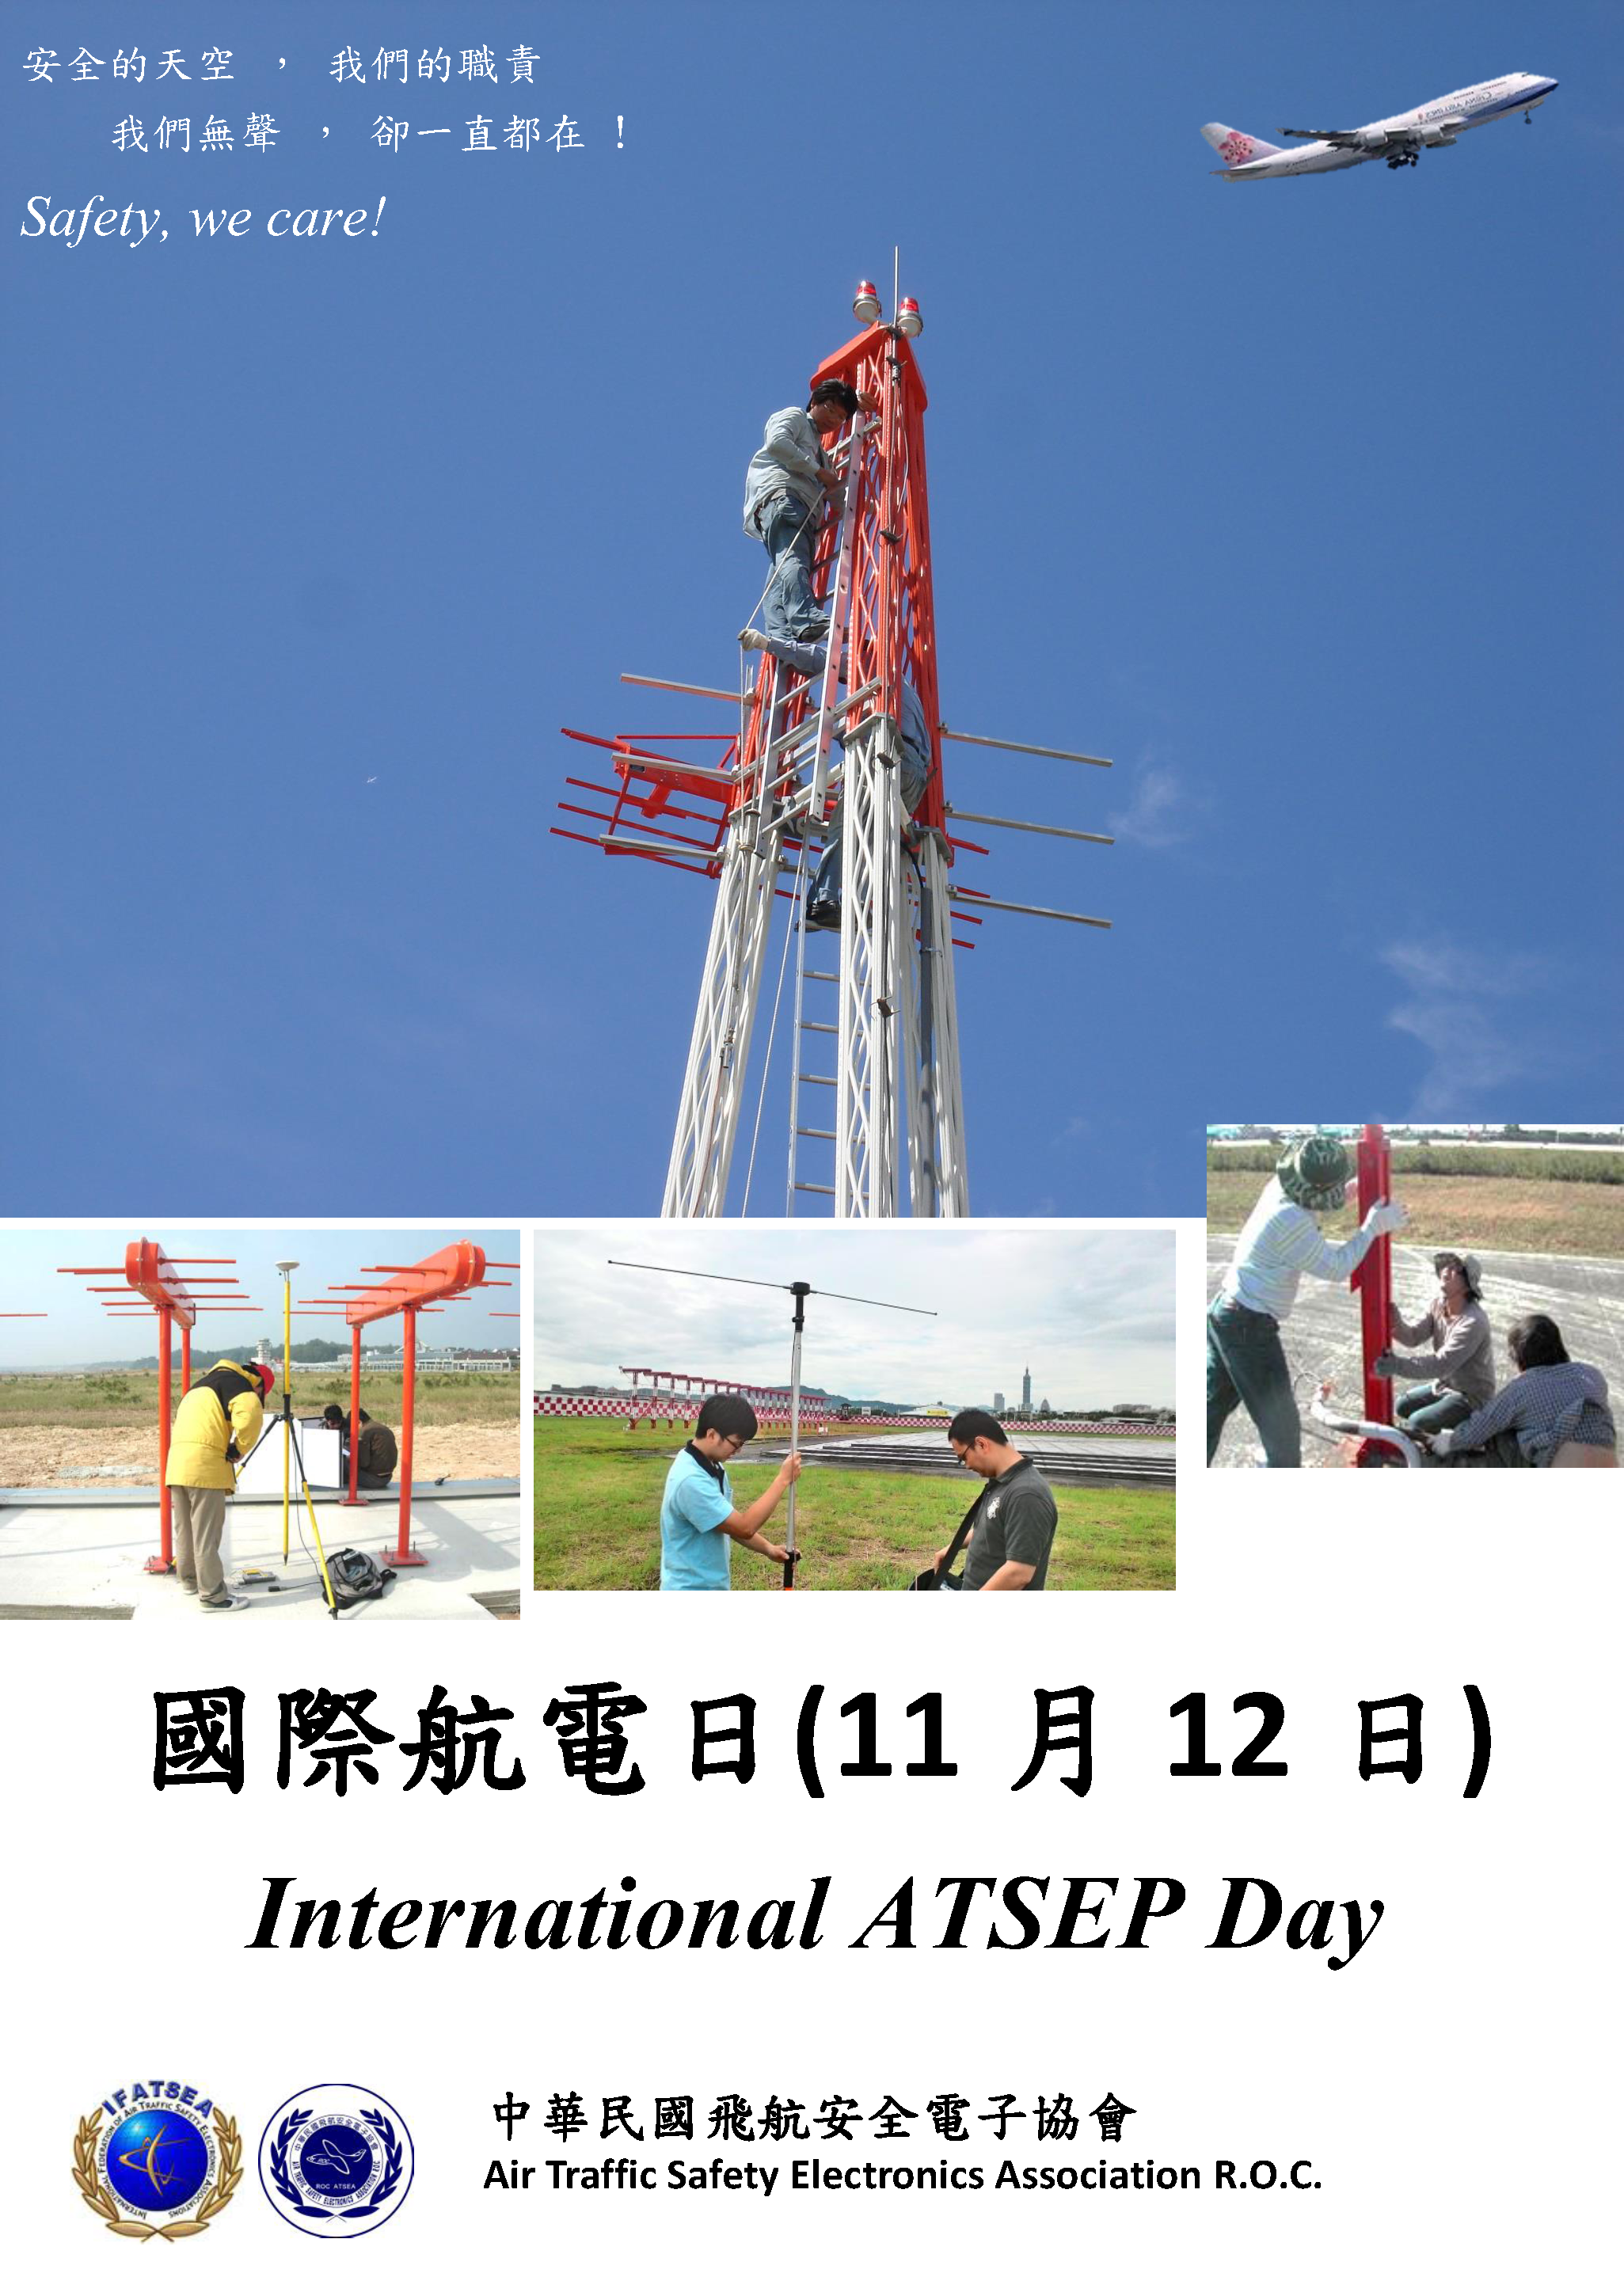 International ATSEP Day